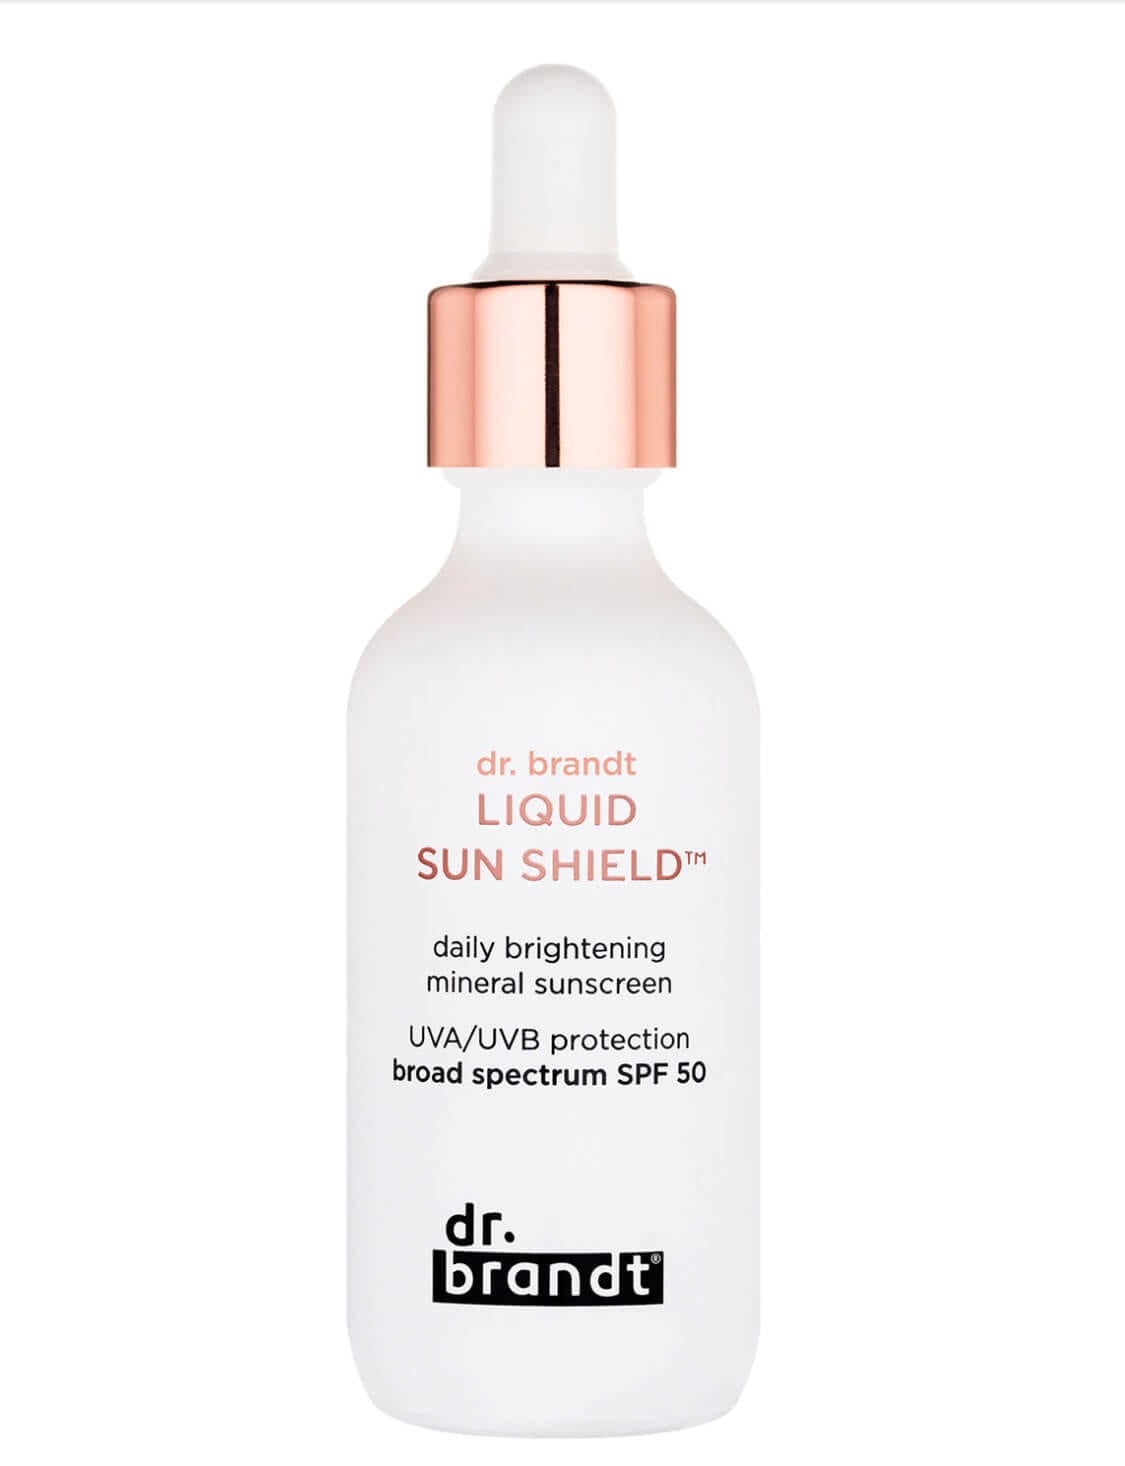 Liquid Sun Shield Daily Brightening Mineral Sunscreen SPF 50 by Dr. Brandt Skincare